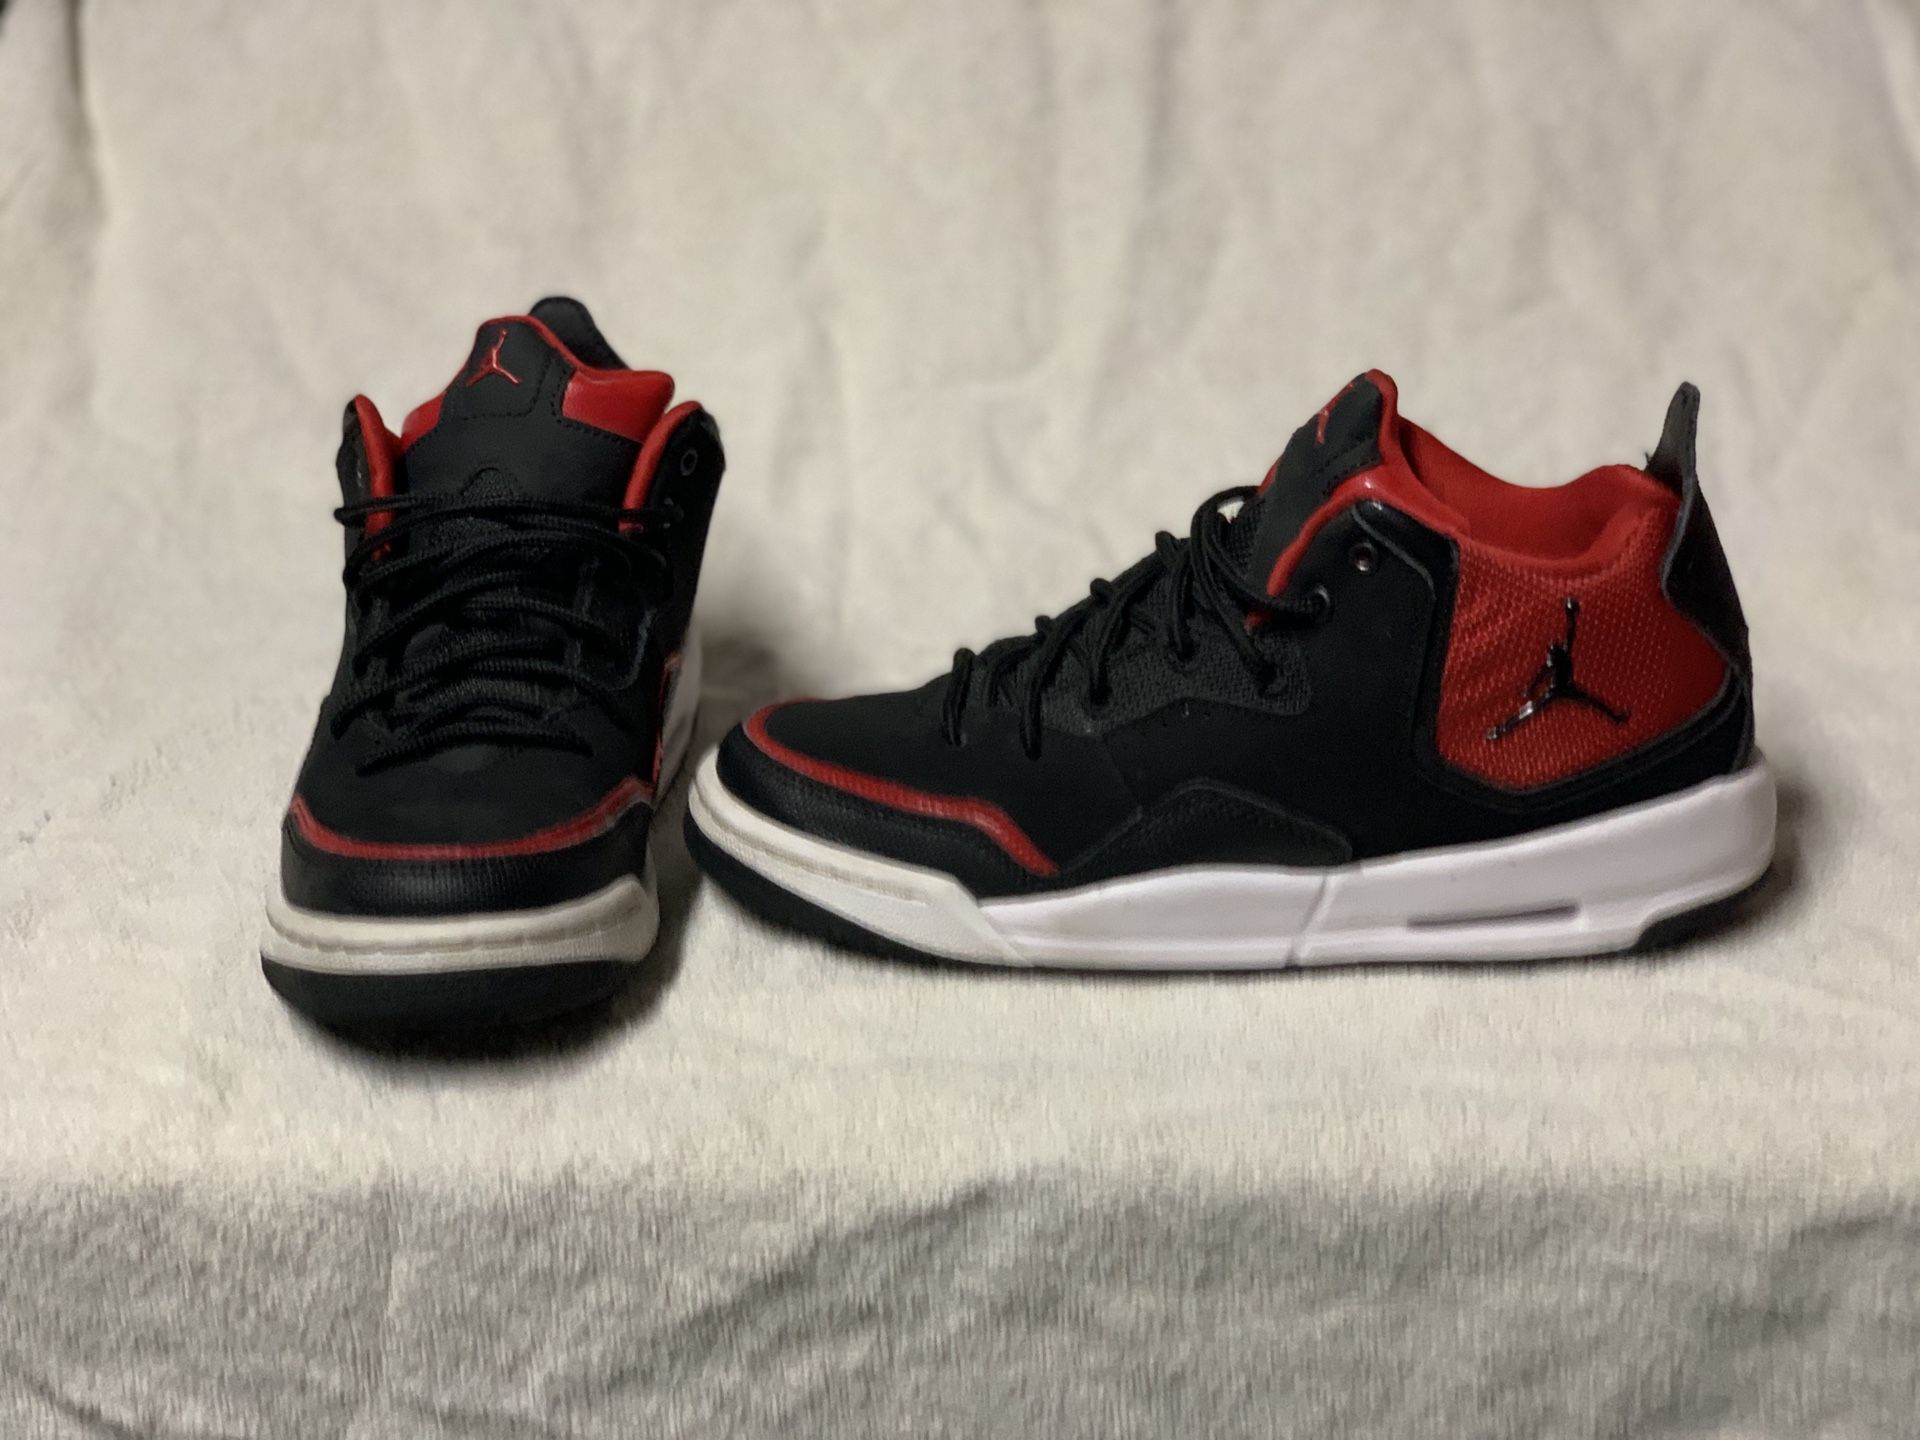 Nike Air Jordan retro shoes